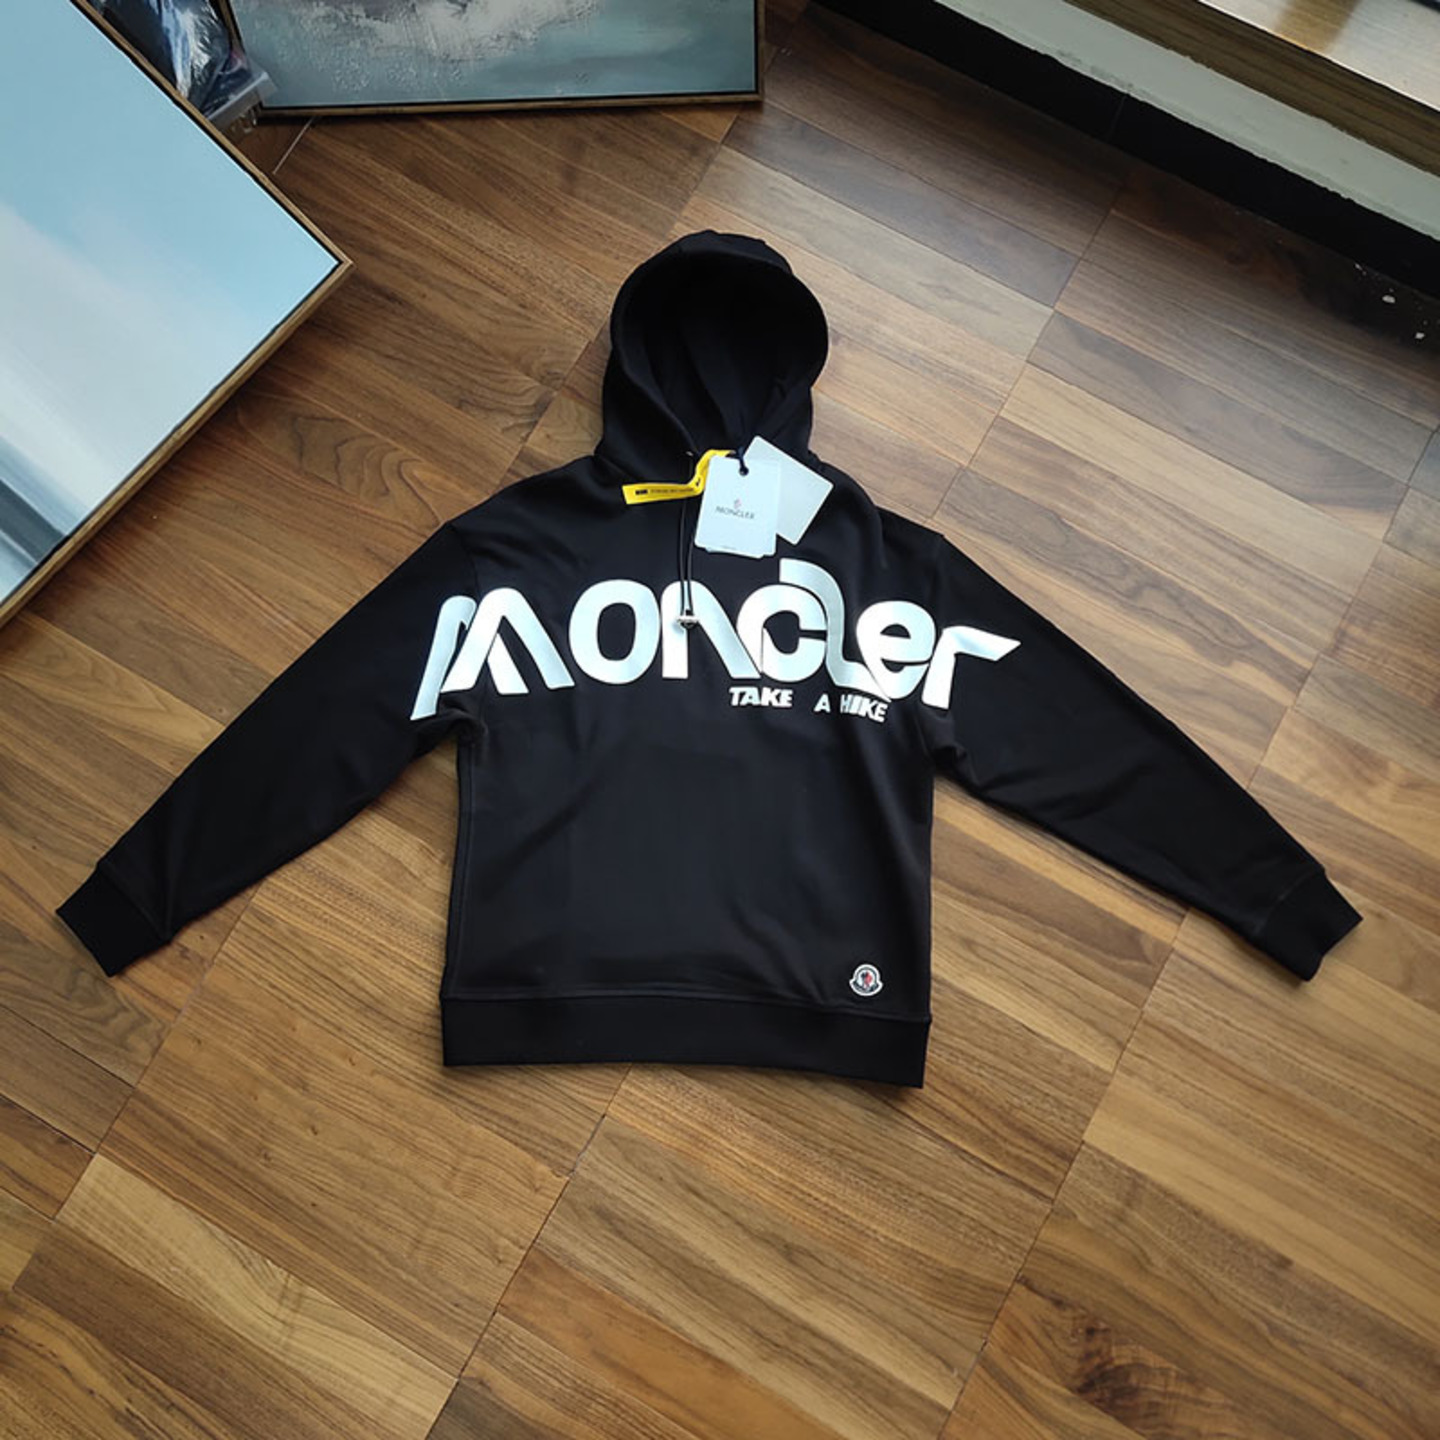 Moncler 1952 x Valextra hoodie sweatshirt